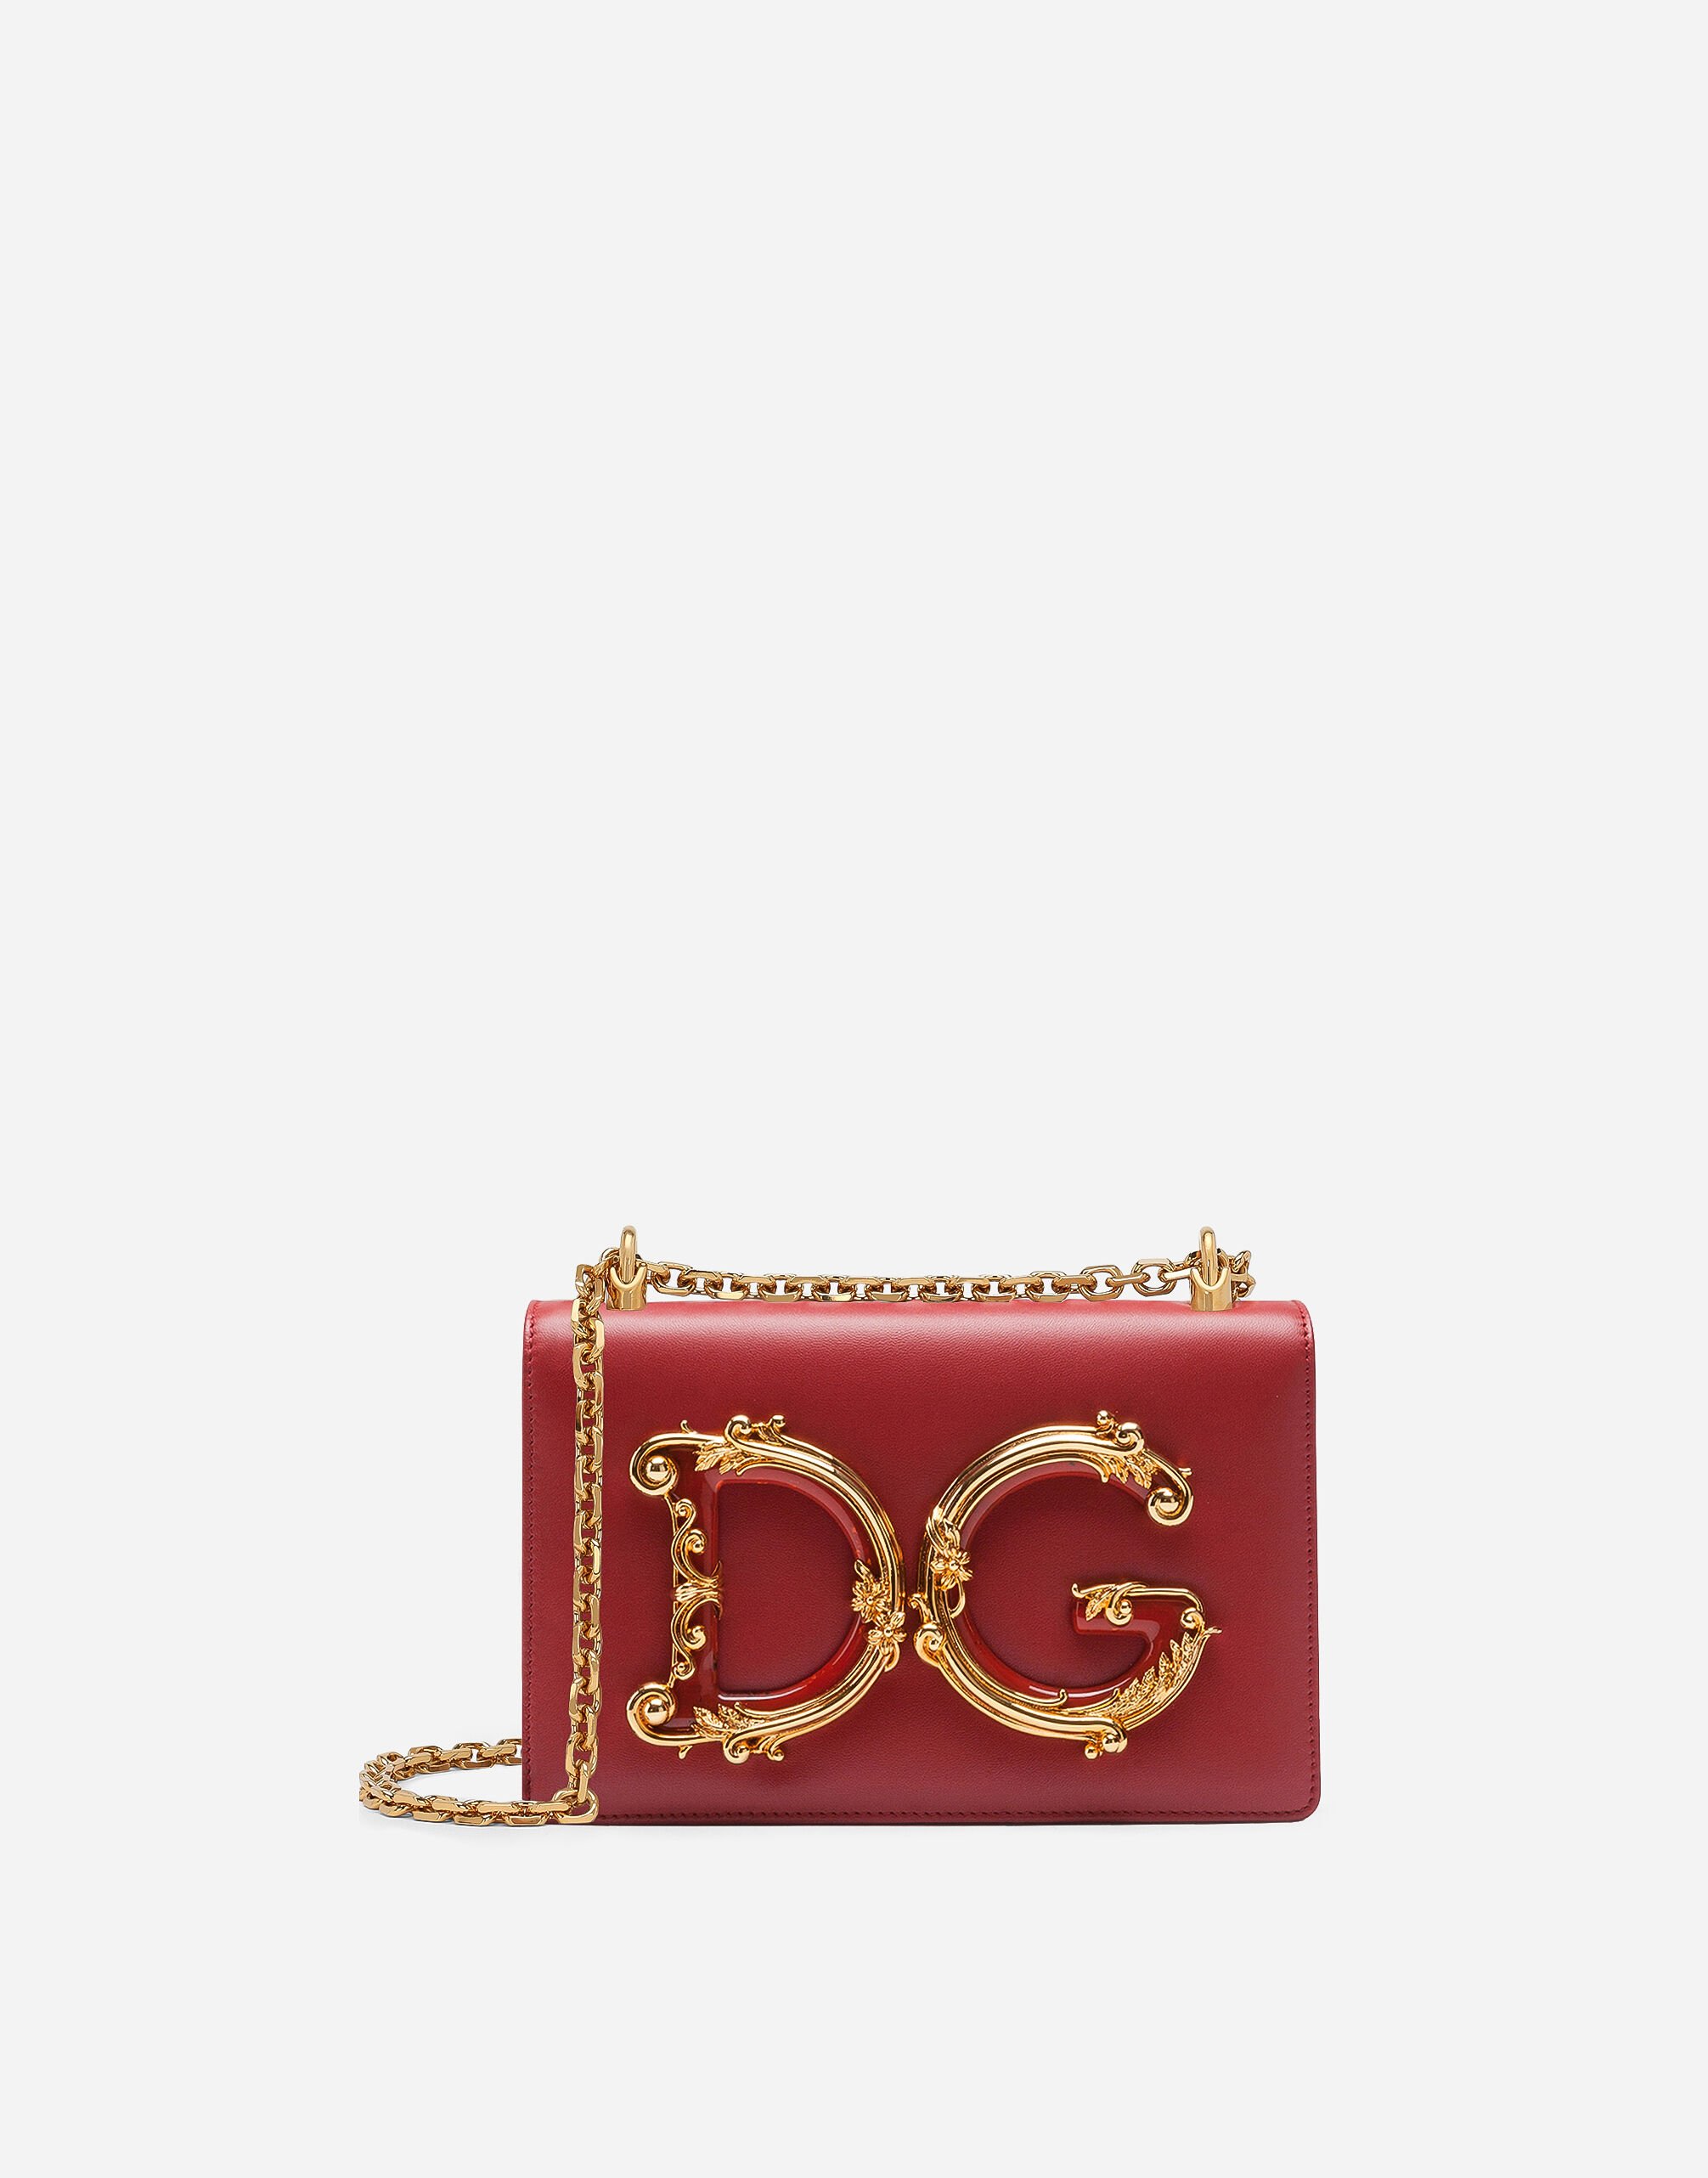 Dolce & Gabbana DG GIRLS バッグ ナッパレザー レッド BB6498AQ963